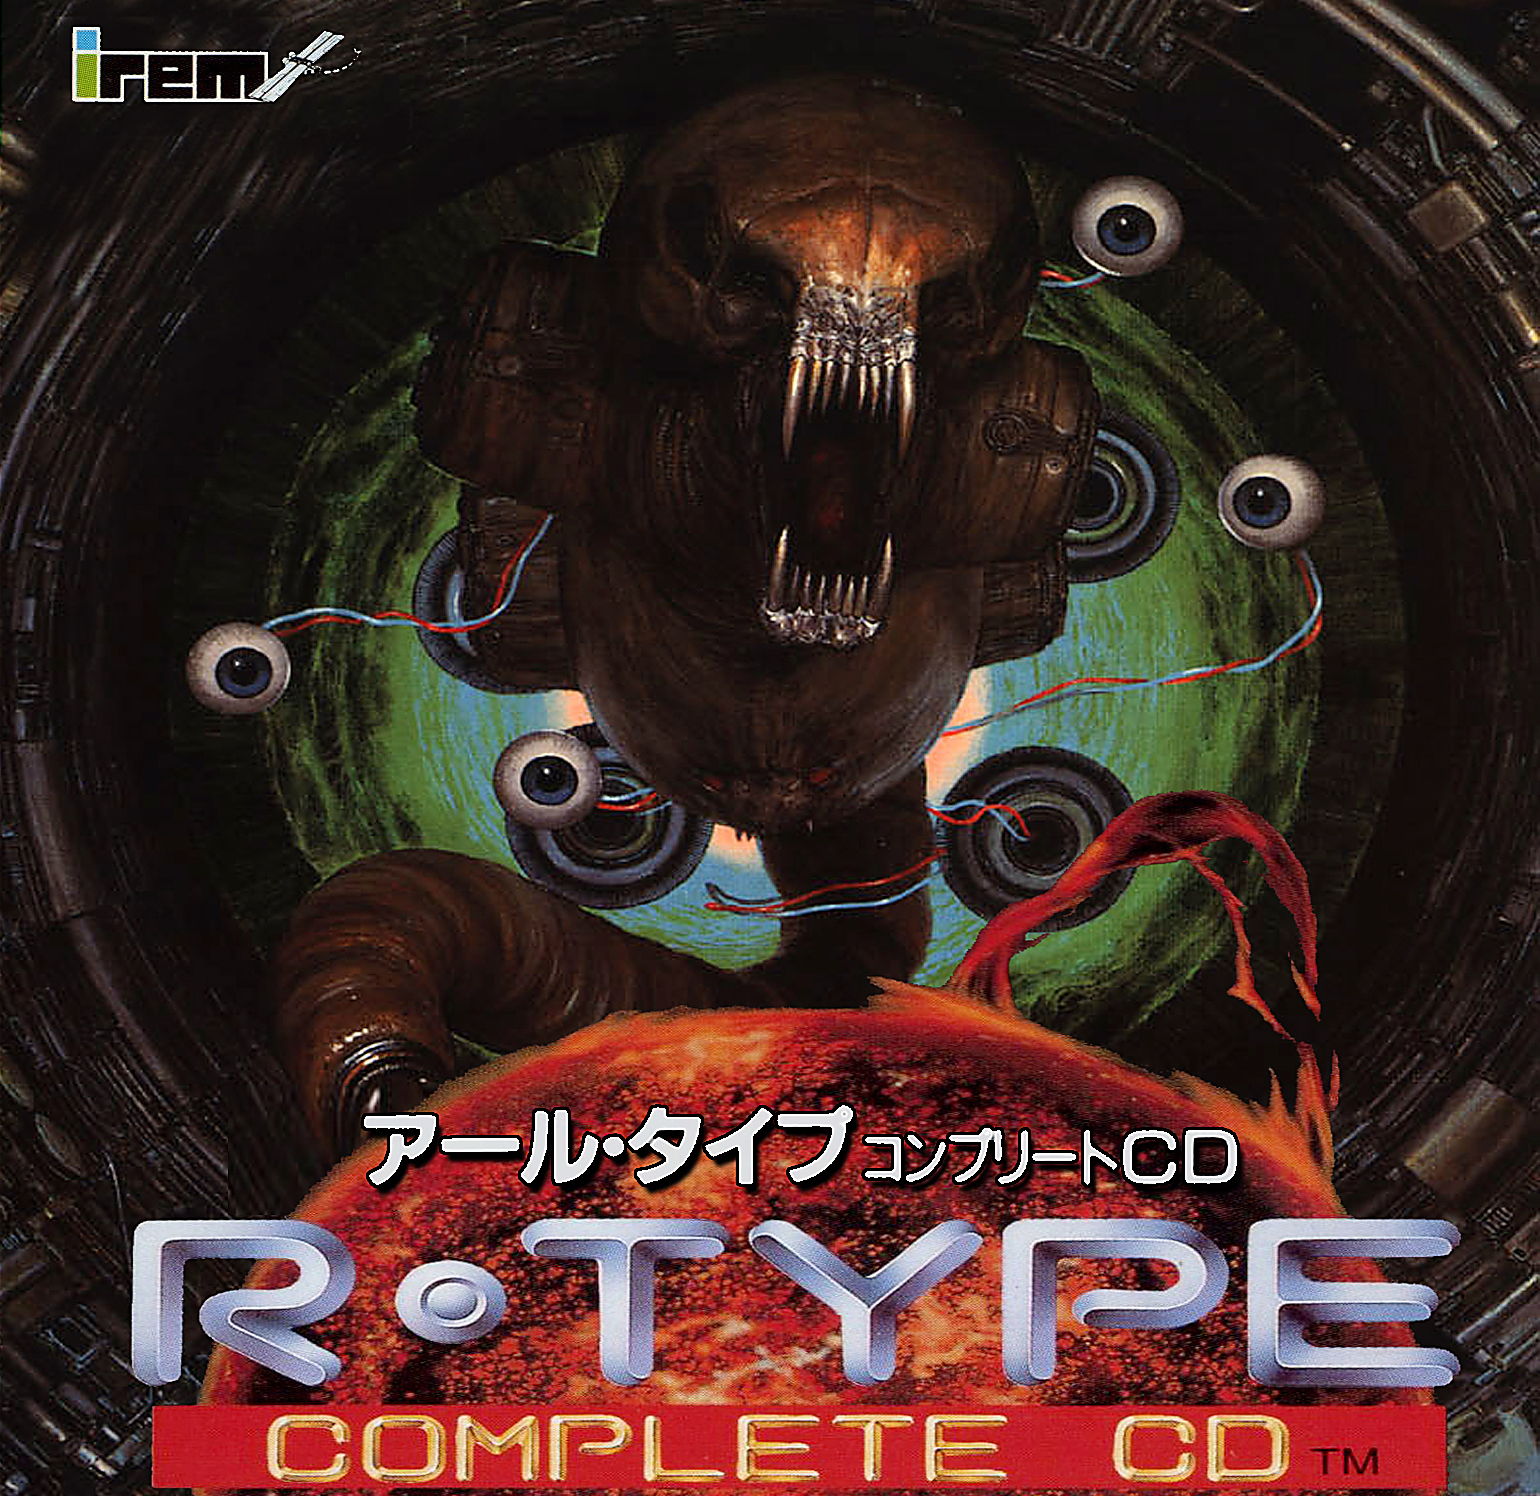 syltefar.com: R-Type Complete CD (PC Engine CD)